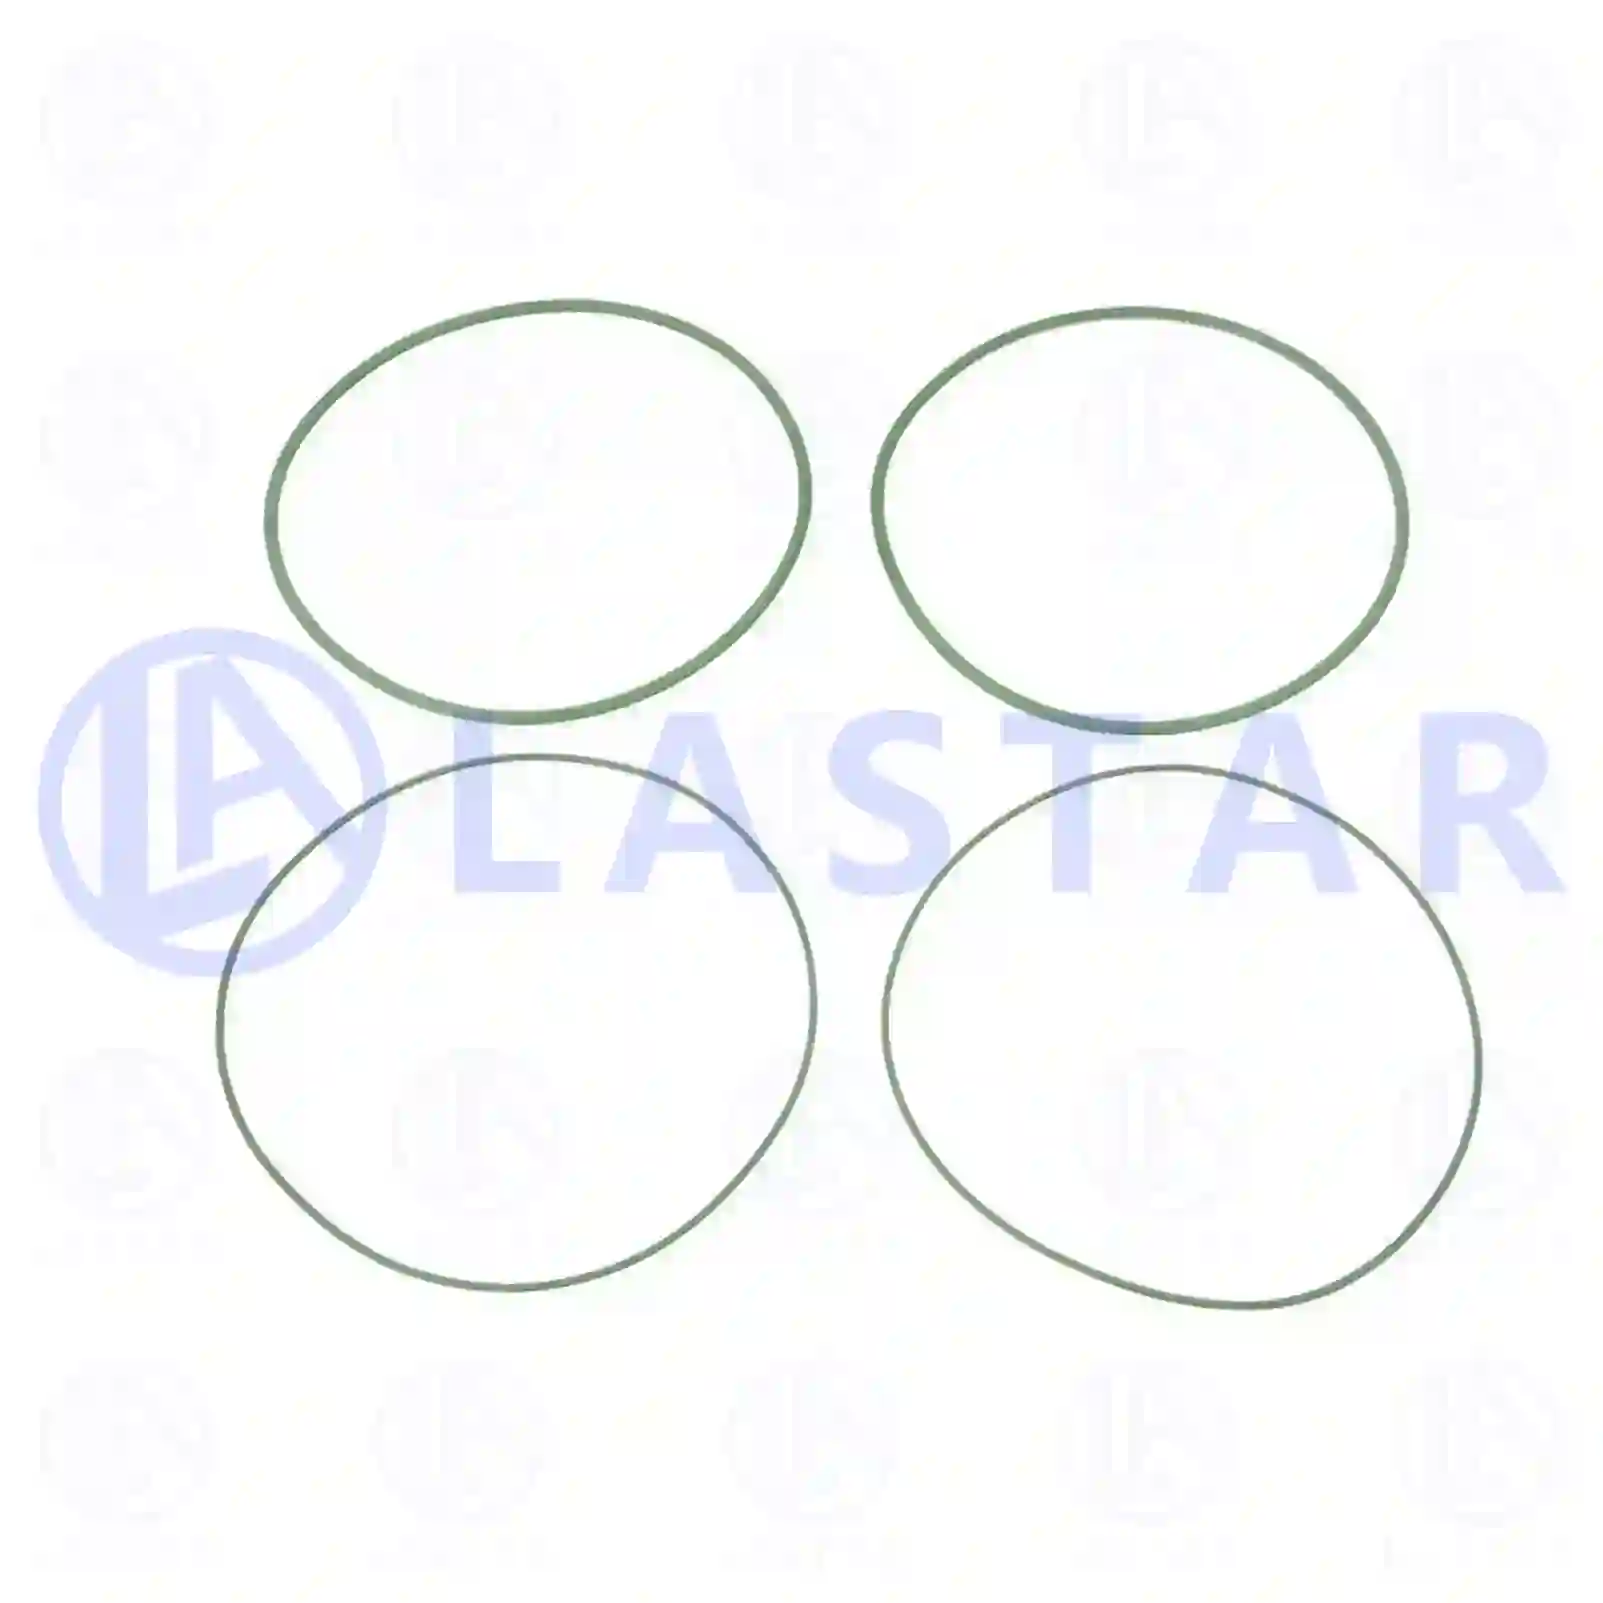 Piston & Liner Seal ring kit, green, la no: 77702552 ,  oem no:0159979148S3 Lastar Spare Part | Truck Spare Parts, Auotomotive Spare Parts